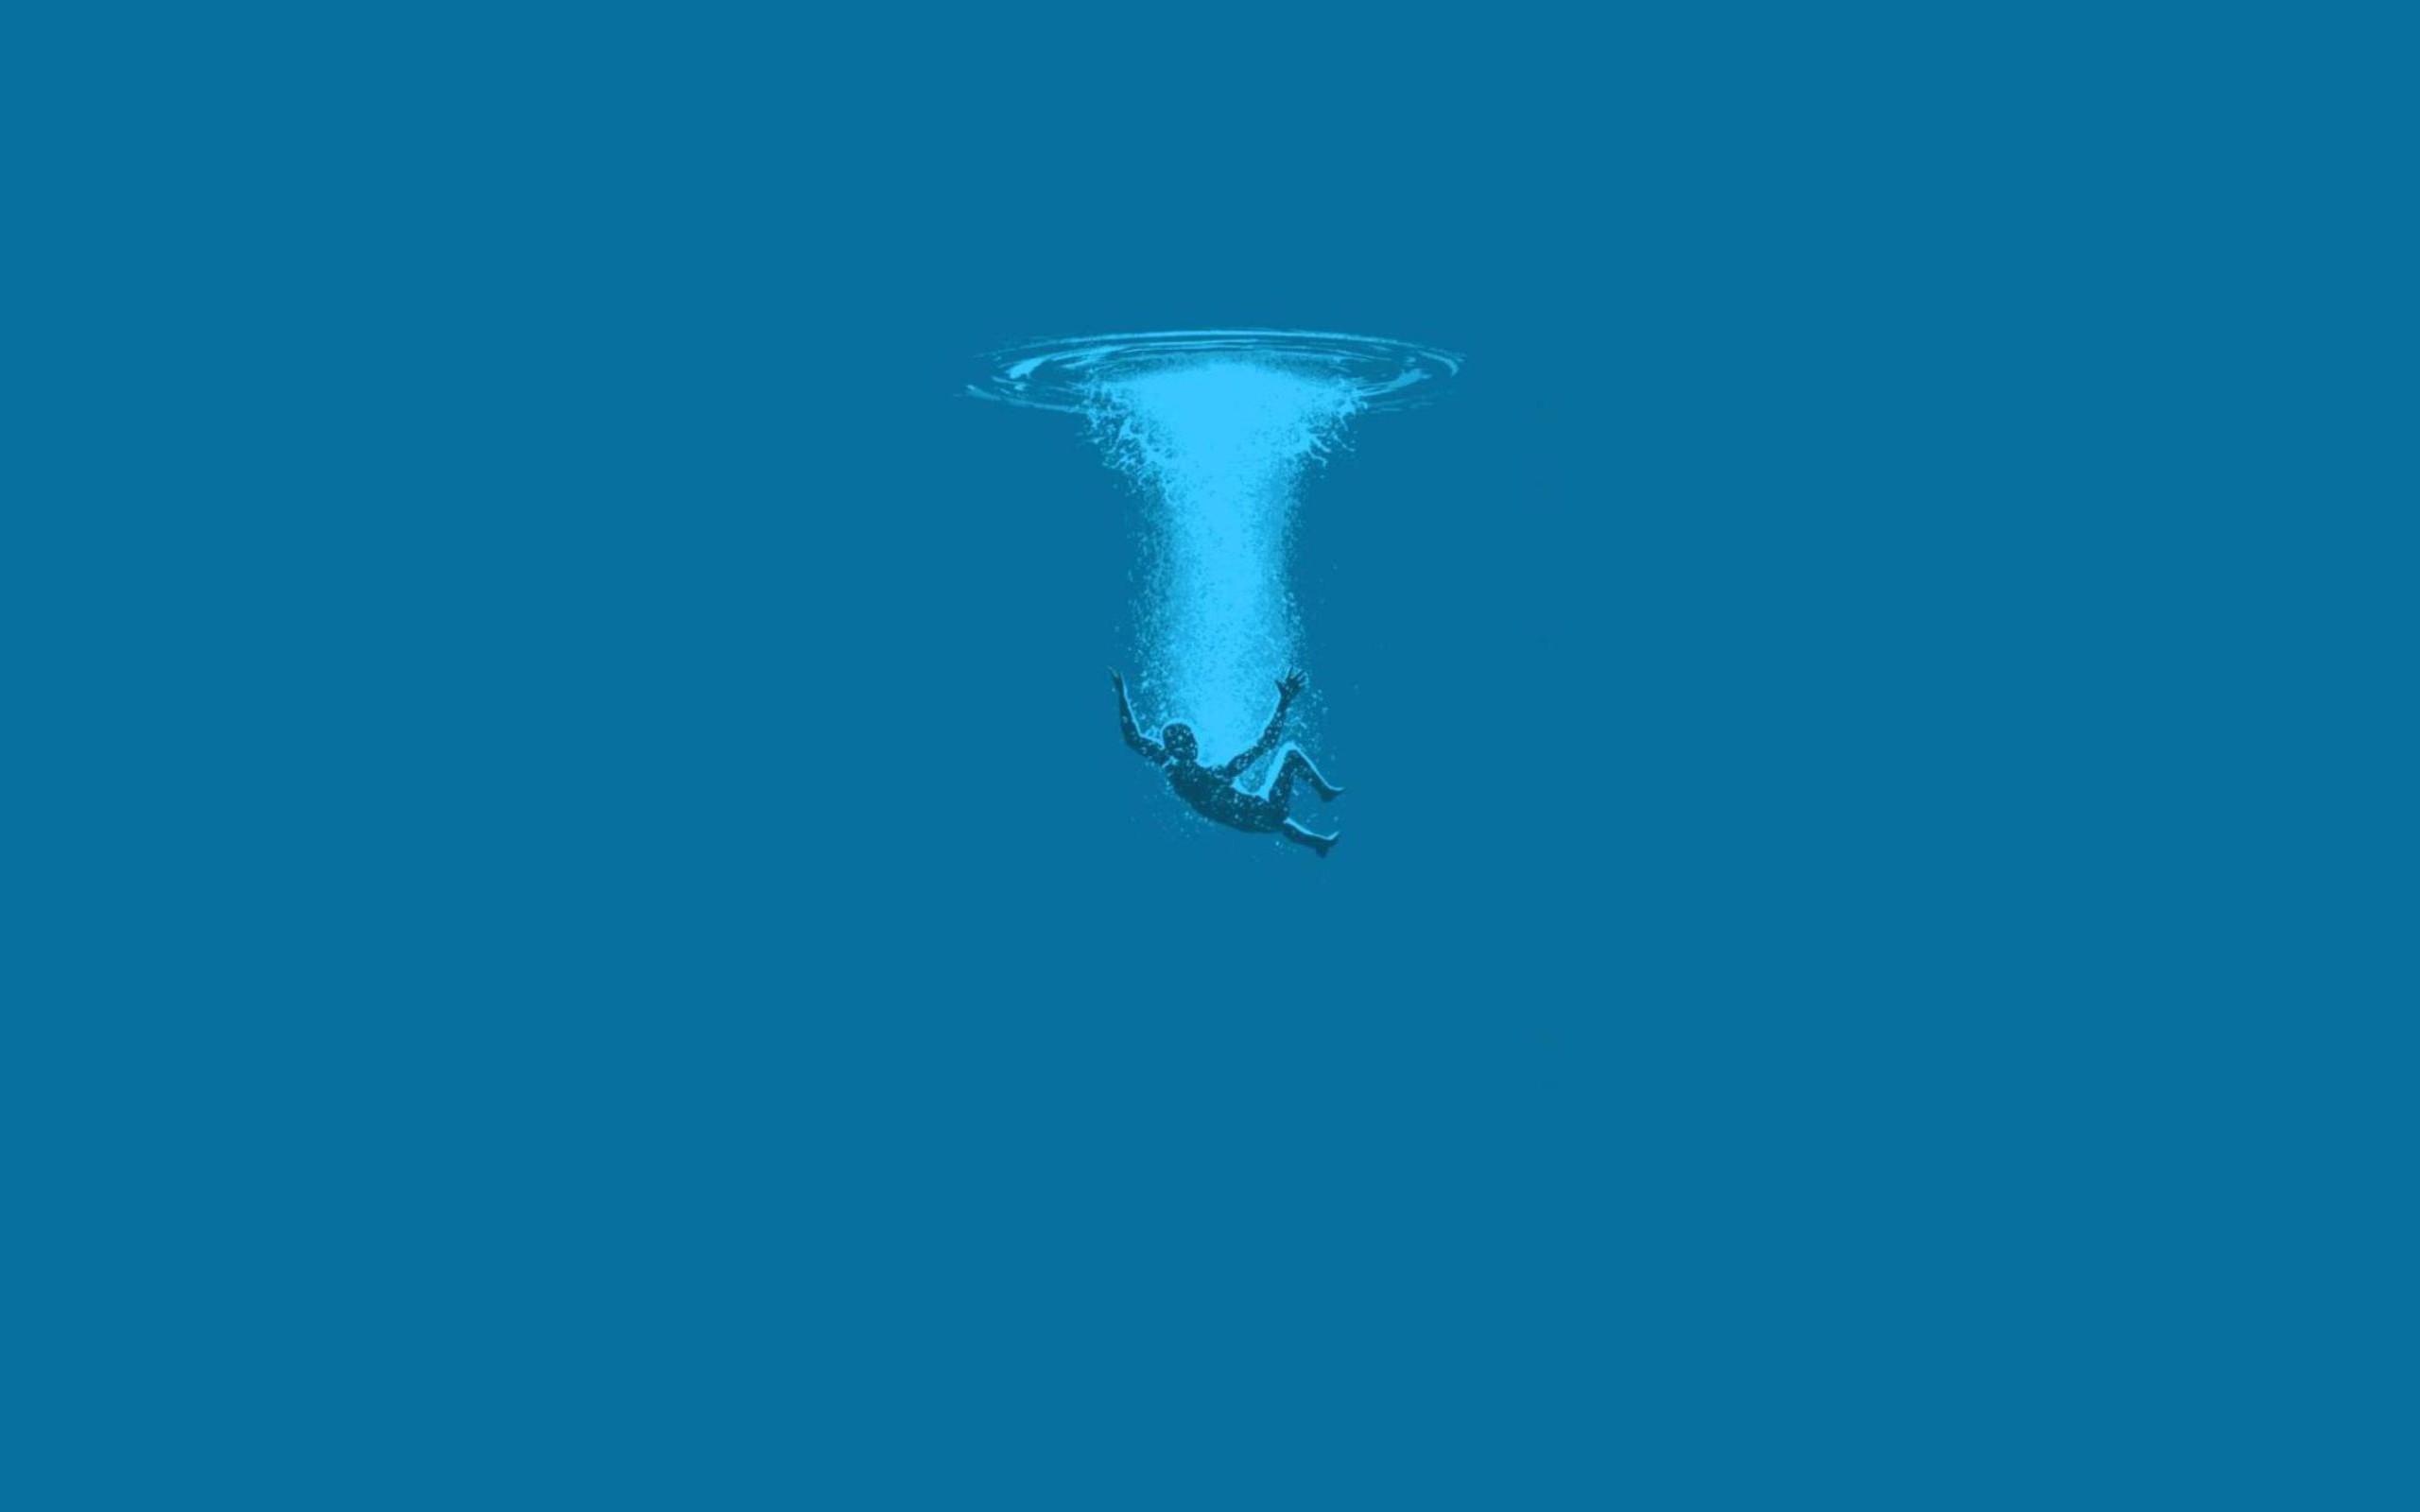 General 2560x1600 minimalism water underwater artwork sea blue background simple background